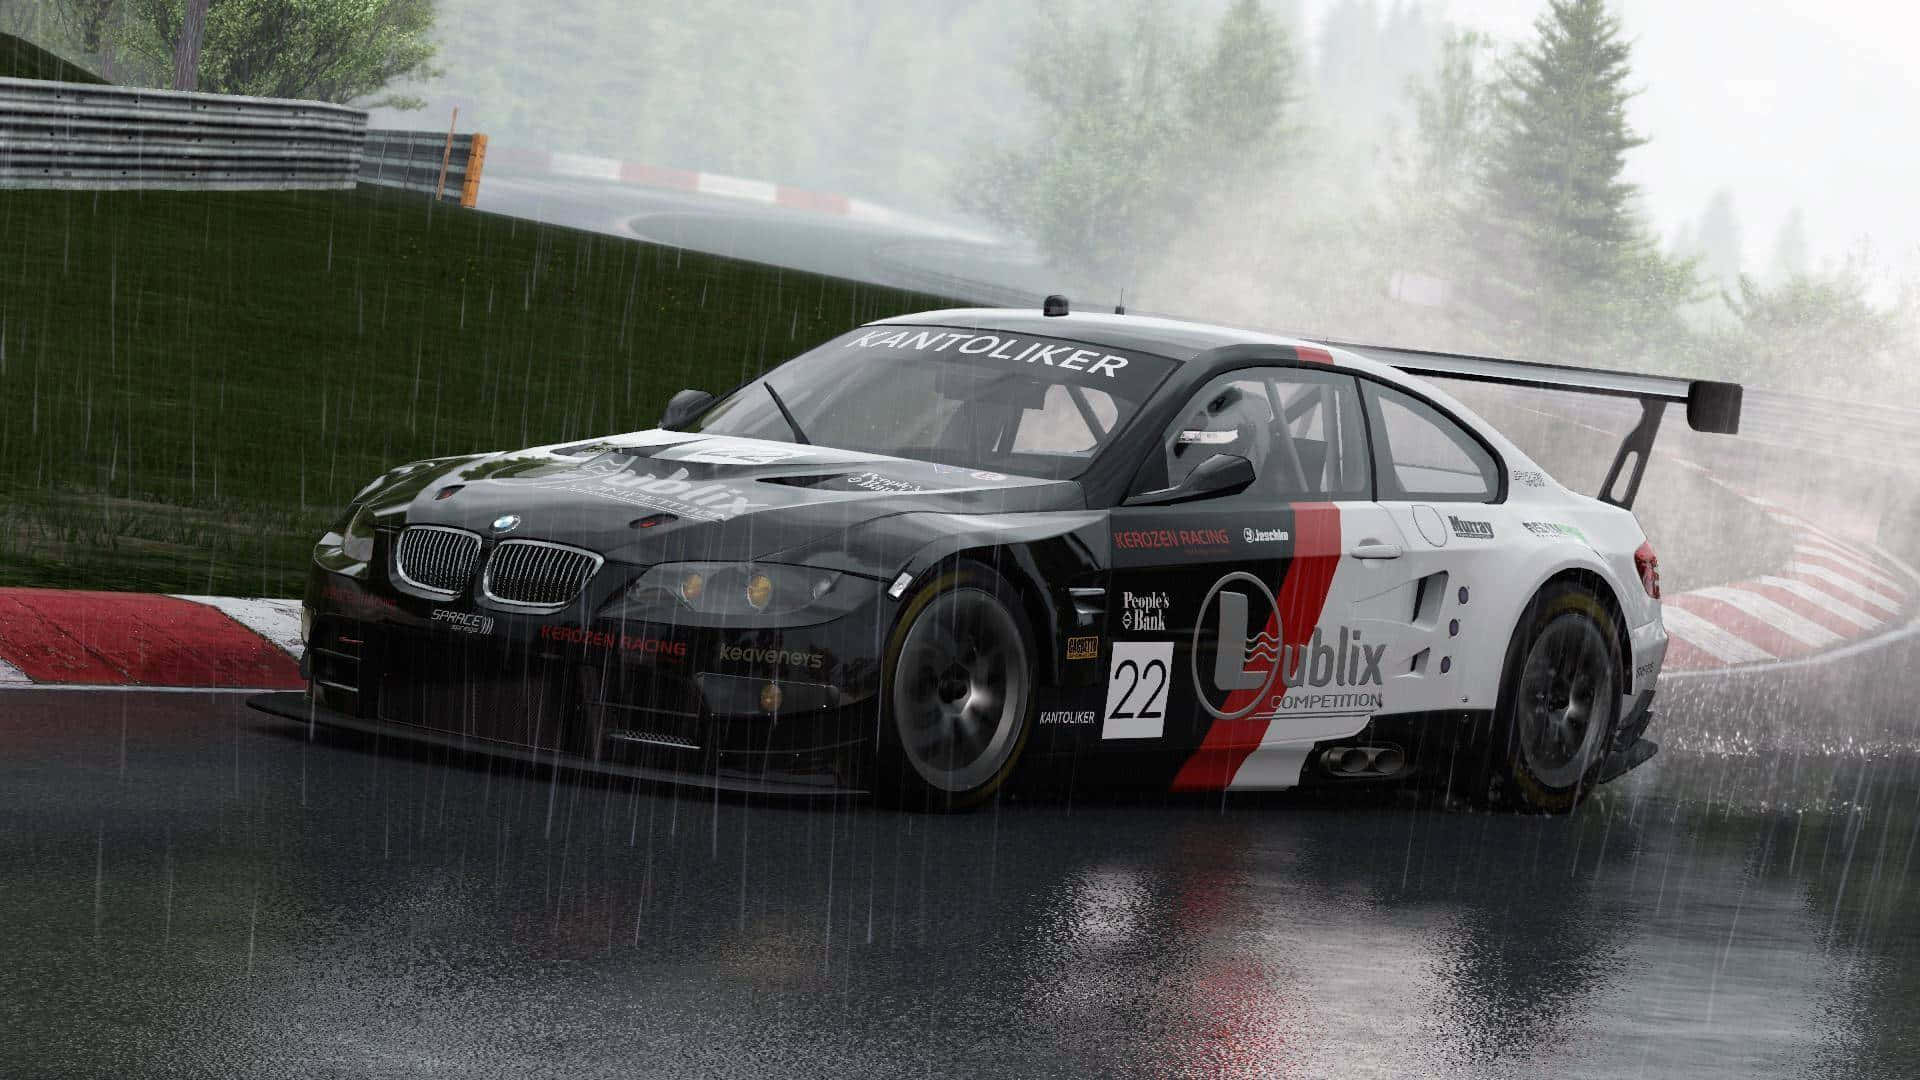 A Race Car Driving In The Rain